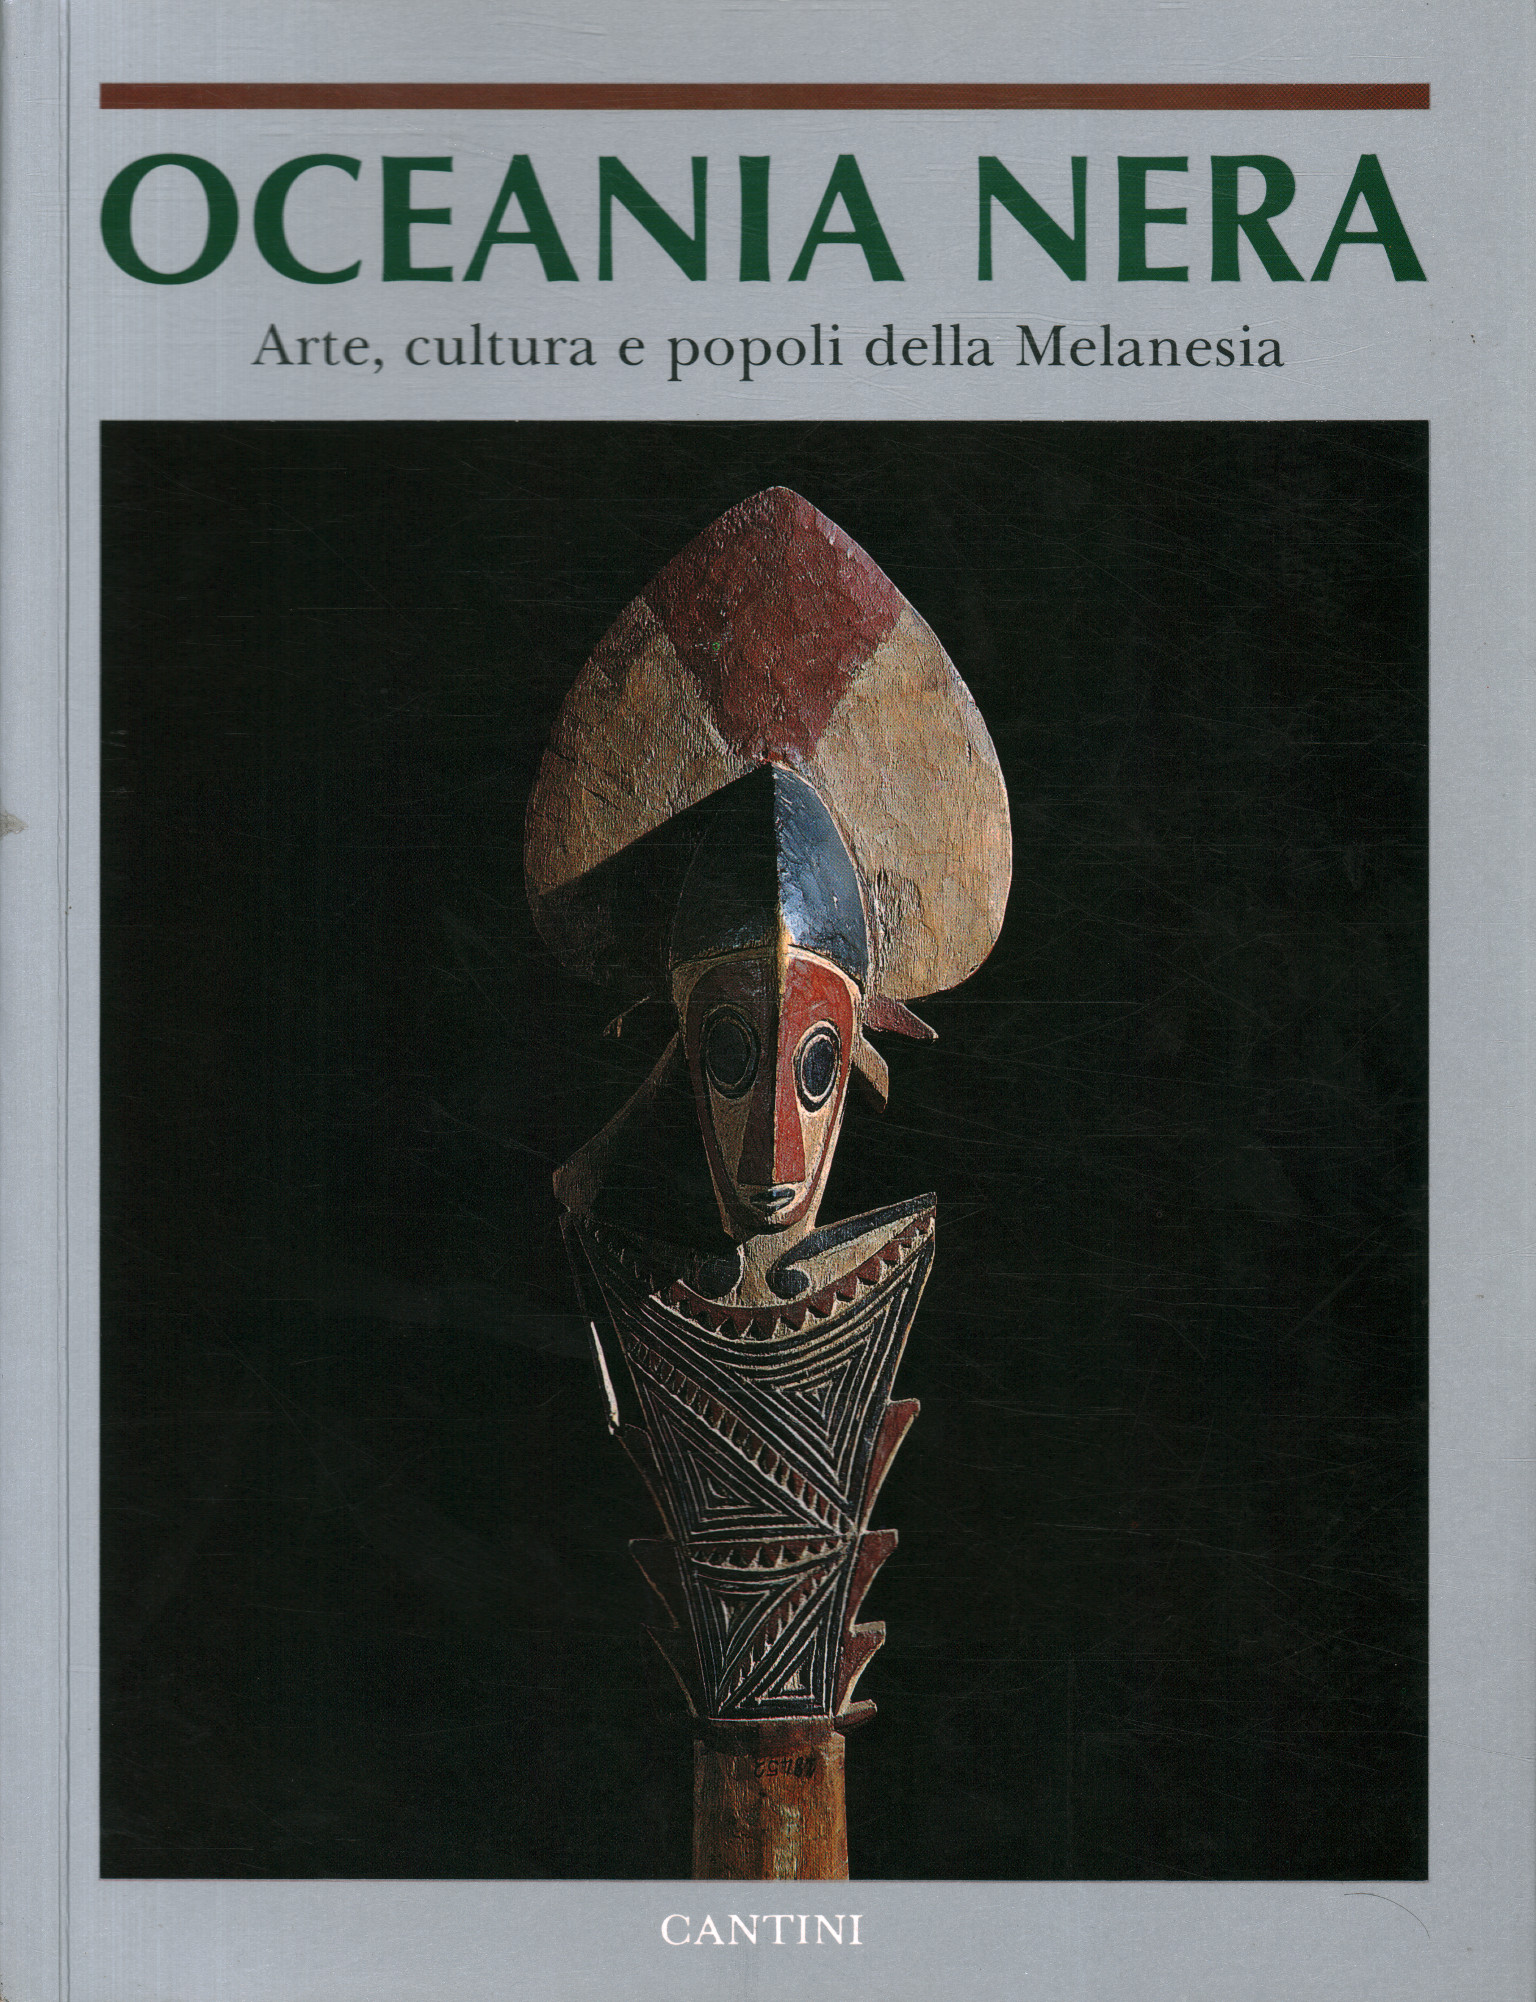 Black Oceania